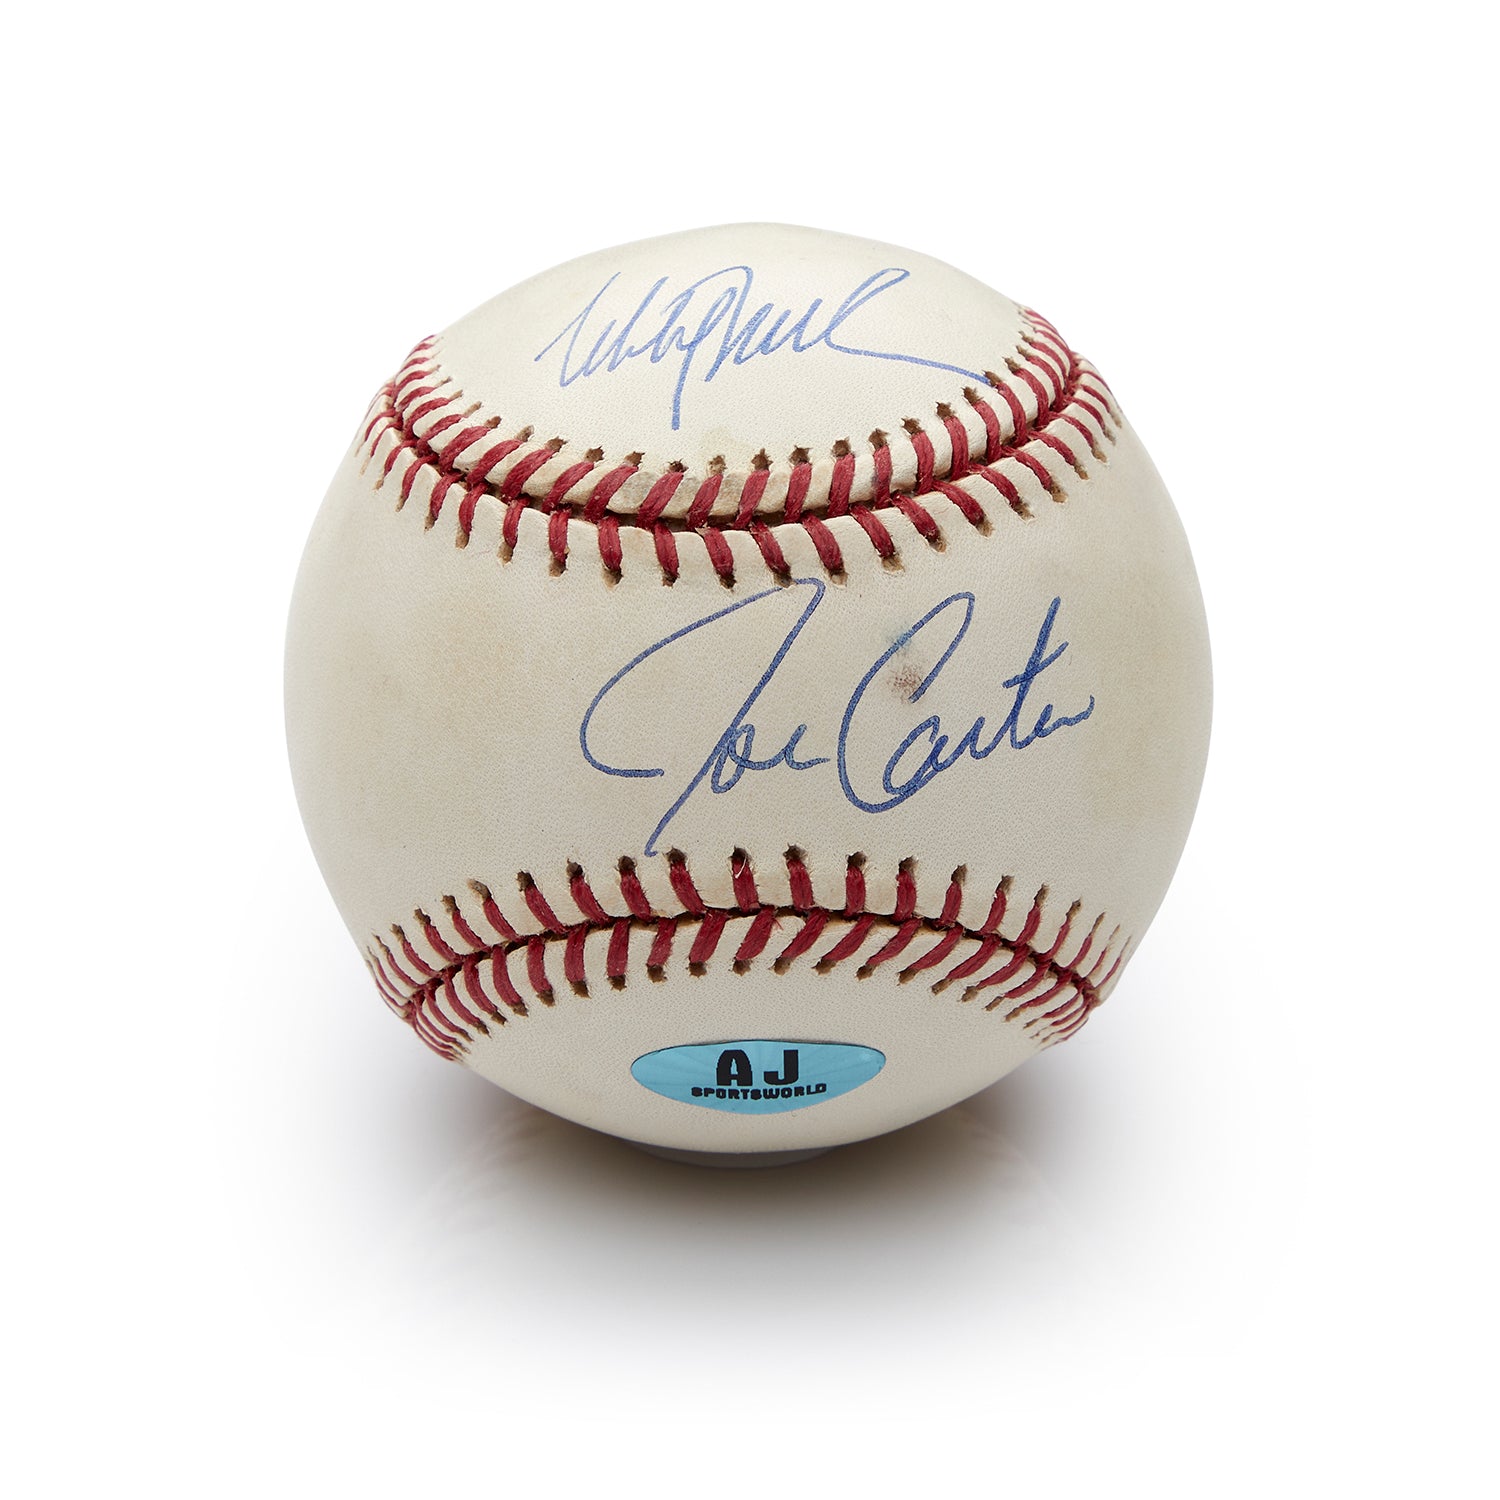 Joe Carter & Mitch Williams Signed Official 1993 World Series MLB Baseball